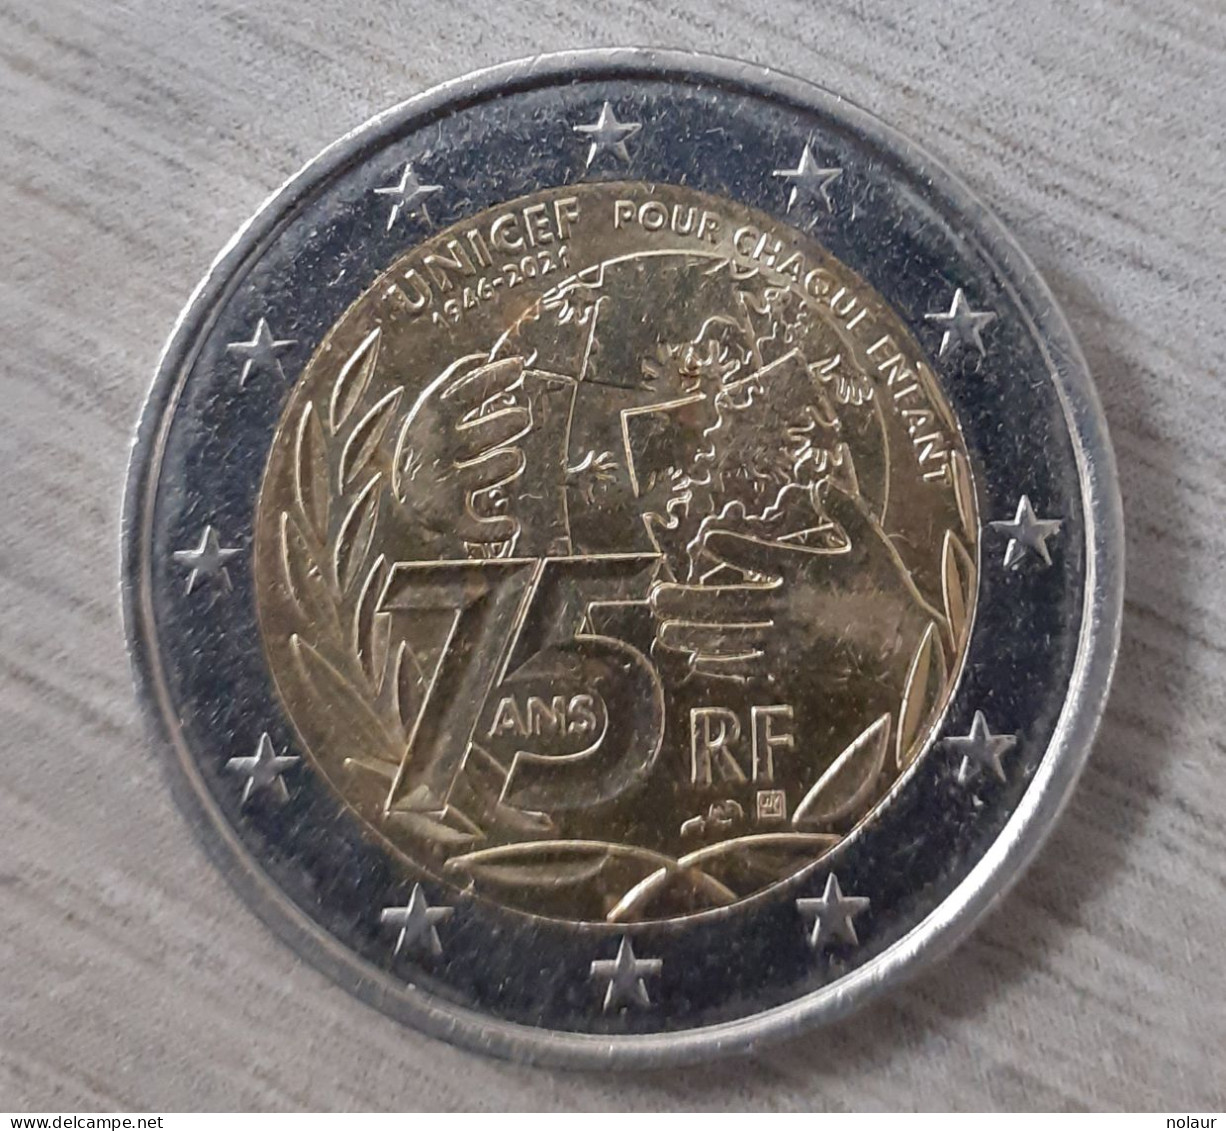 PIECE COMMEMORATIVE 2 EUROS - Unicef - France